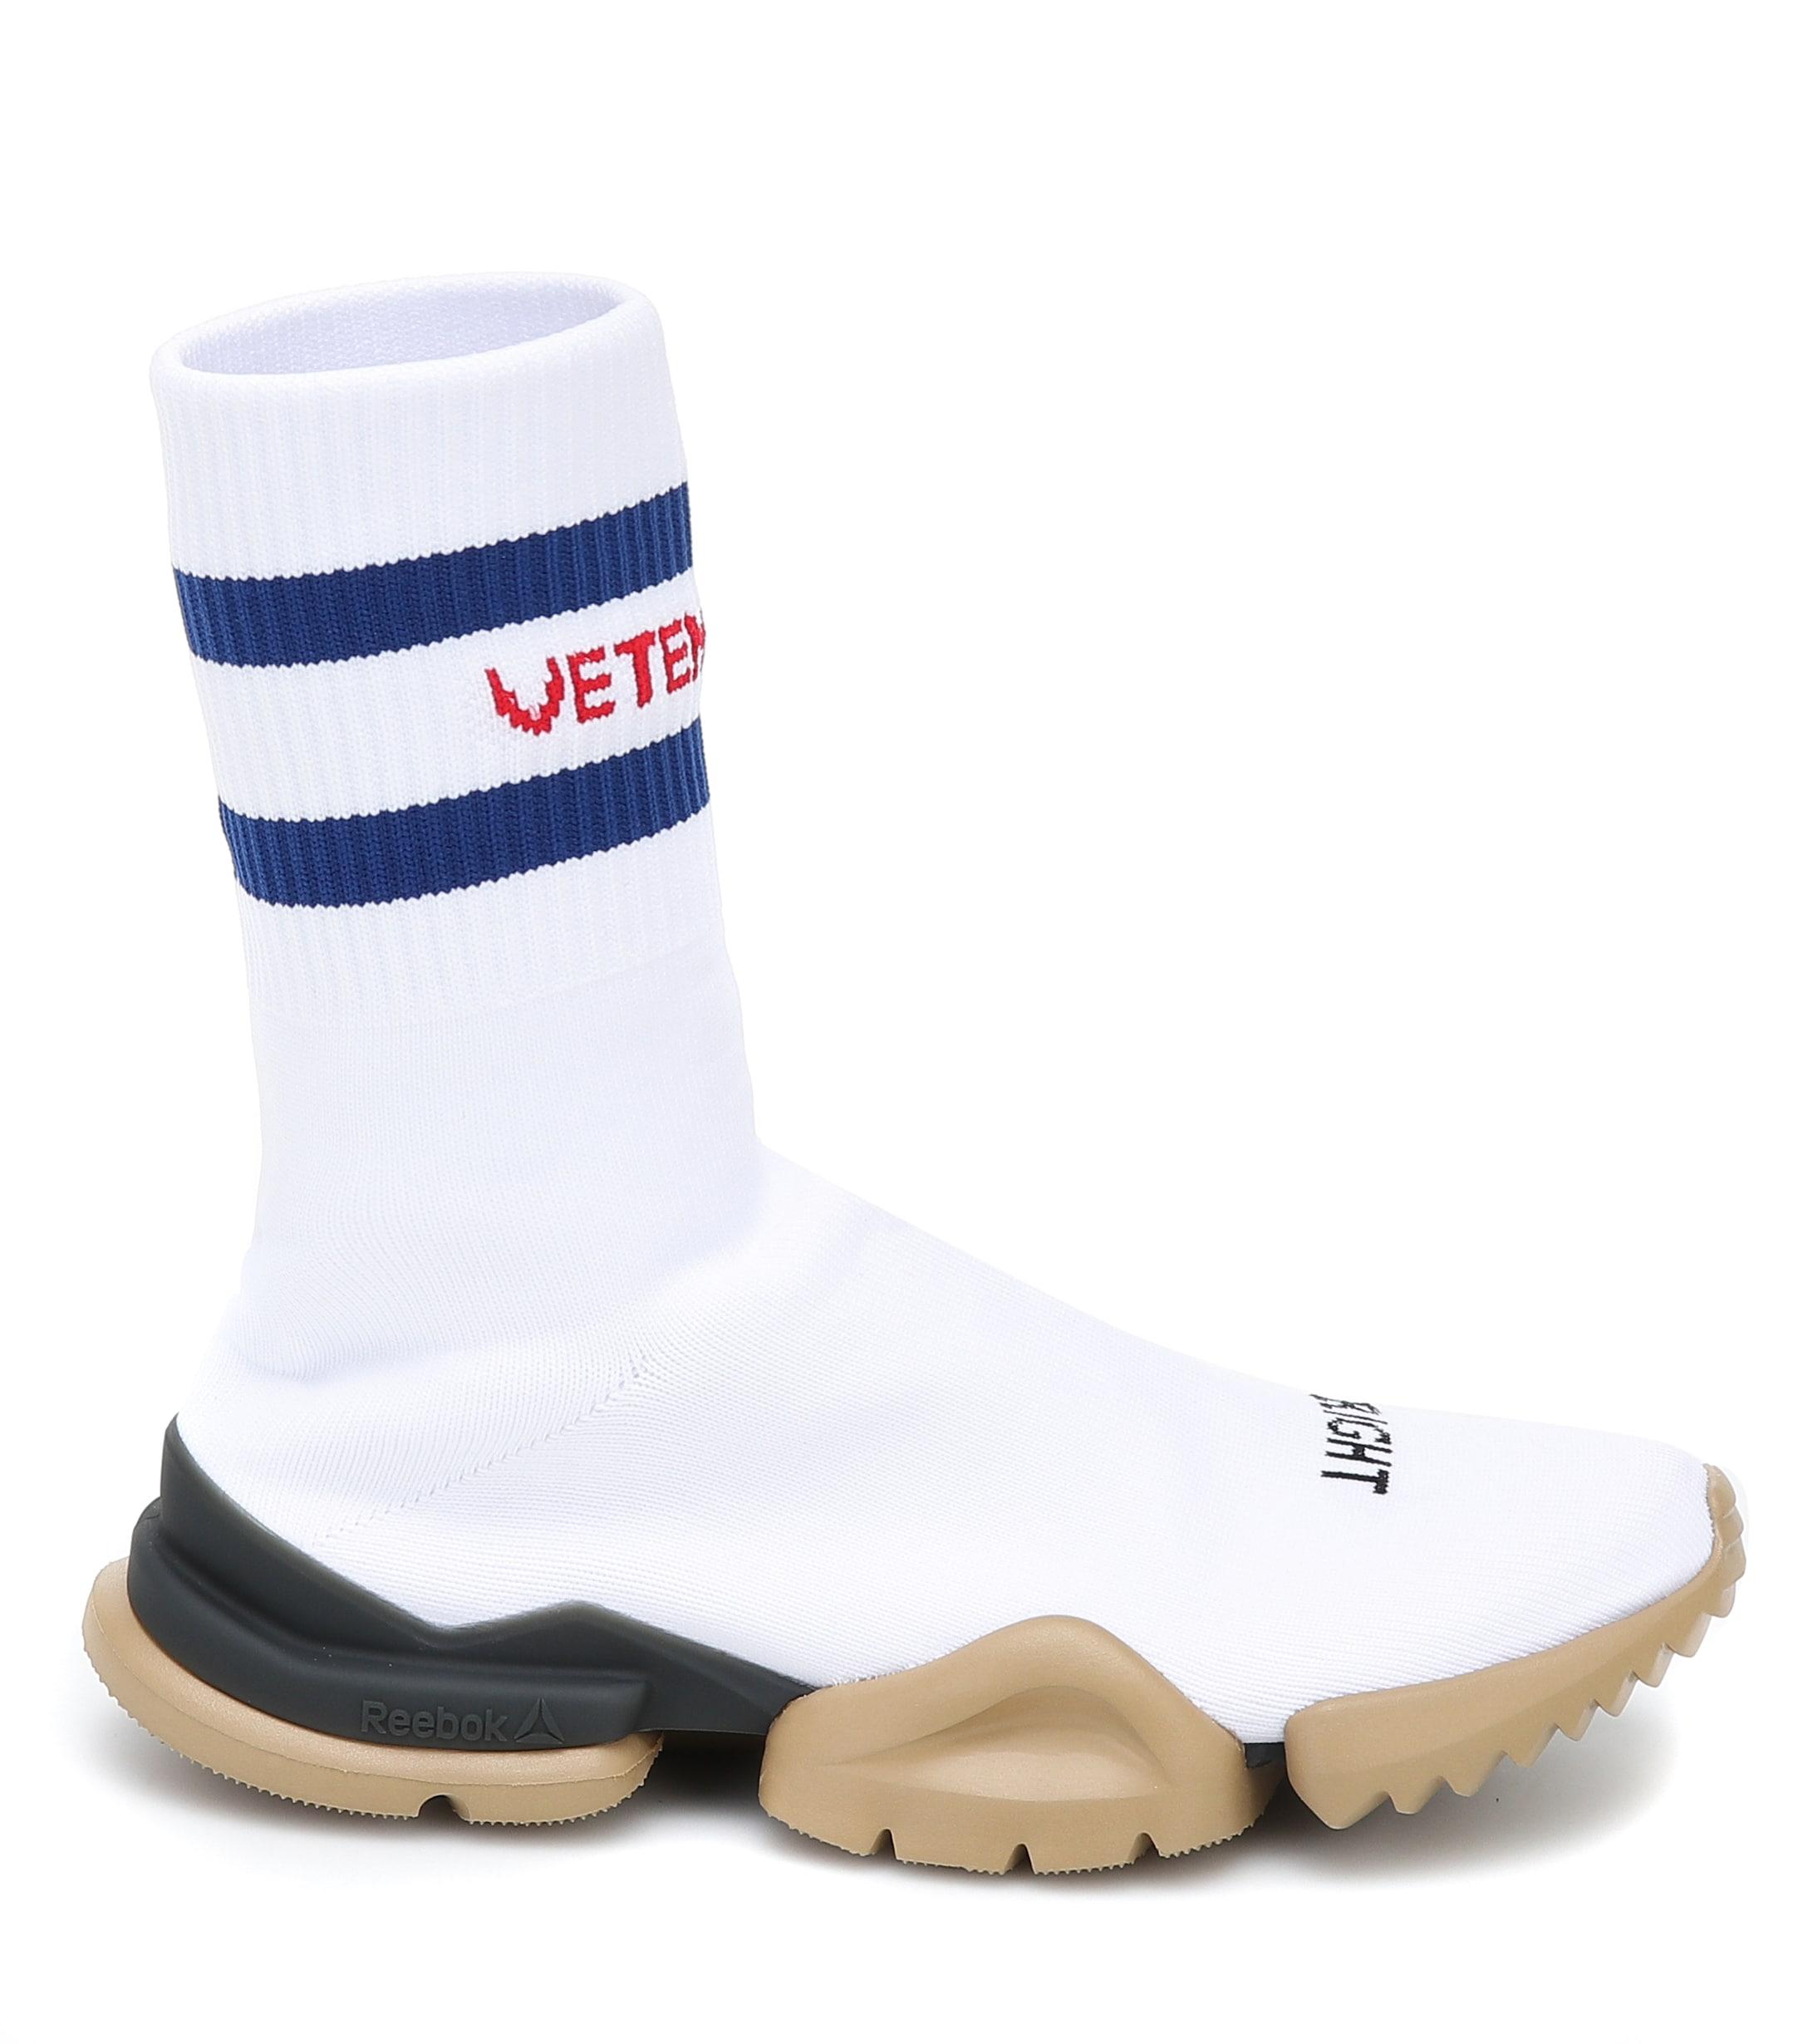 Vetements Rubber X Reebok Classic Sock Runner Sneakers in White - Lyst